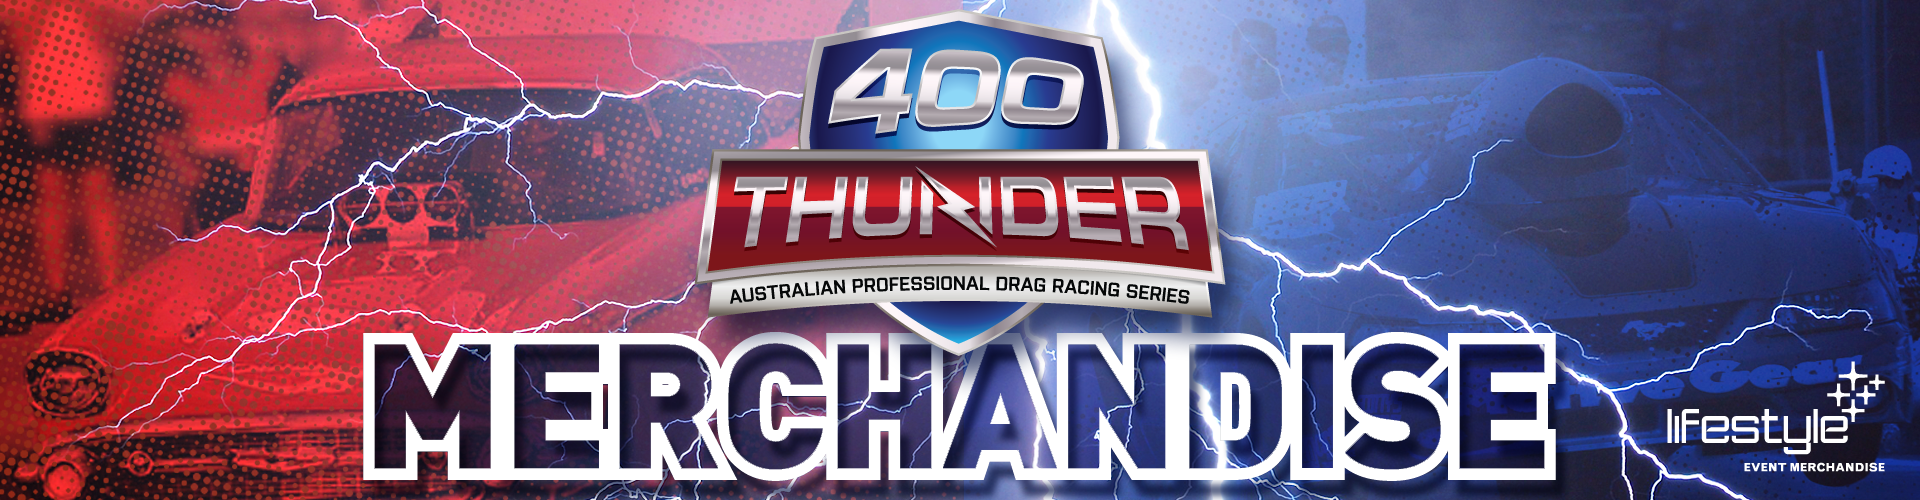 400 Thunder Official Merchandise Store